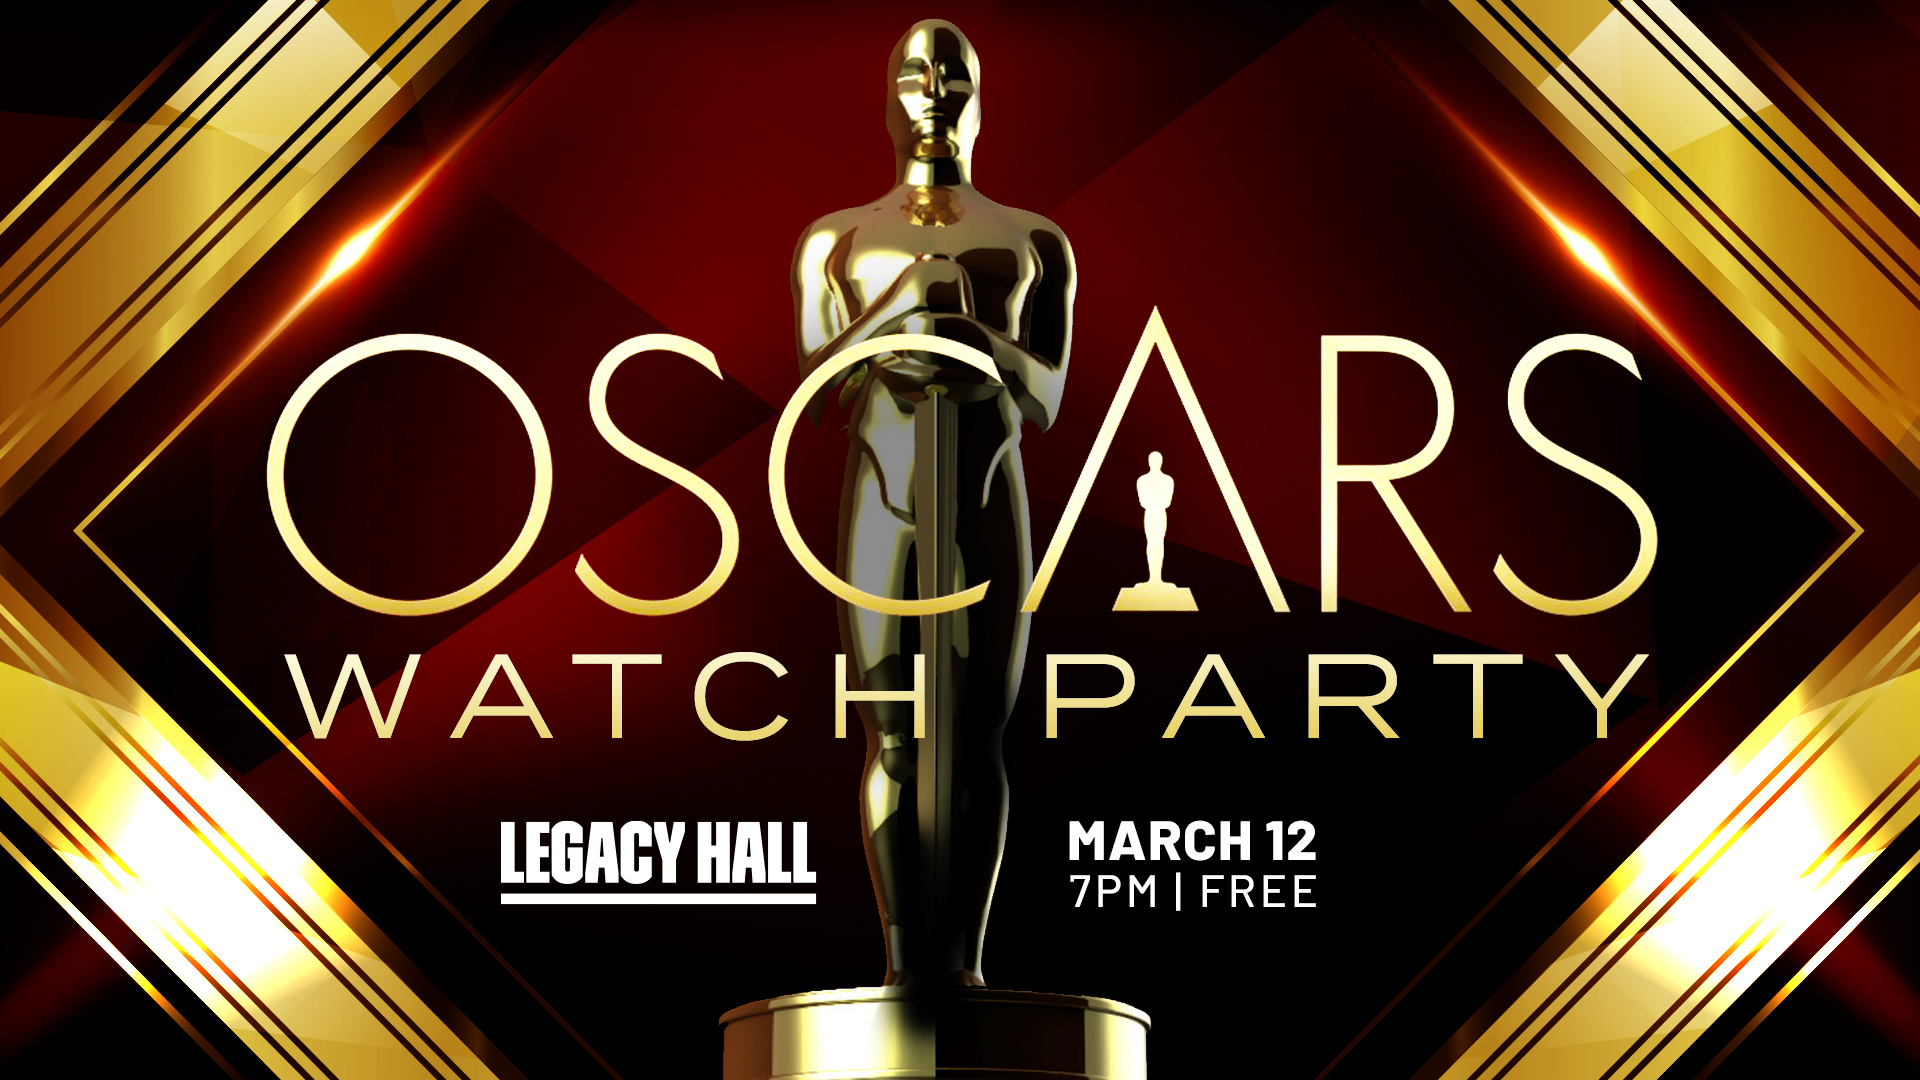 Oscars Watch Party - hero